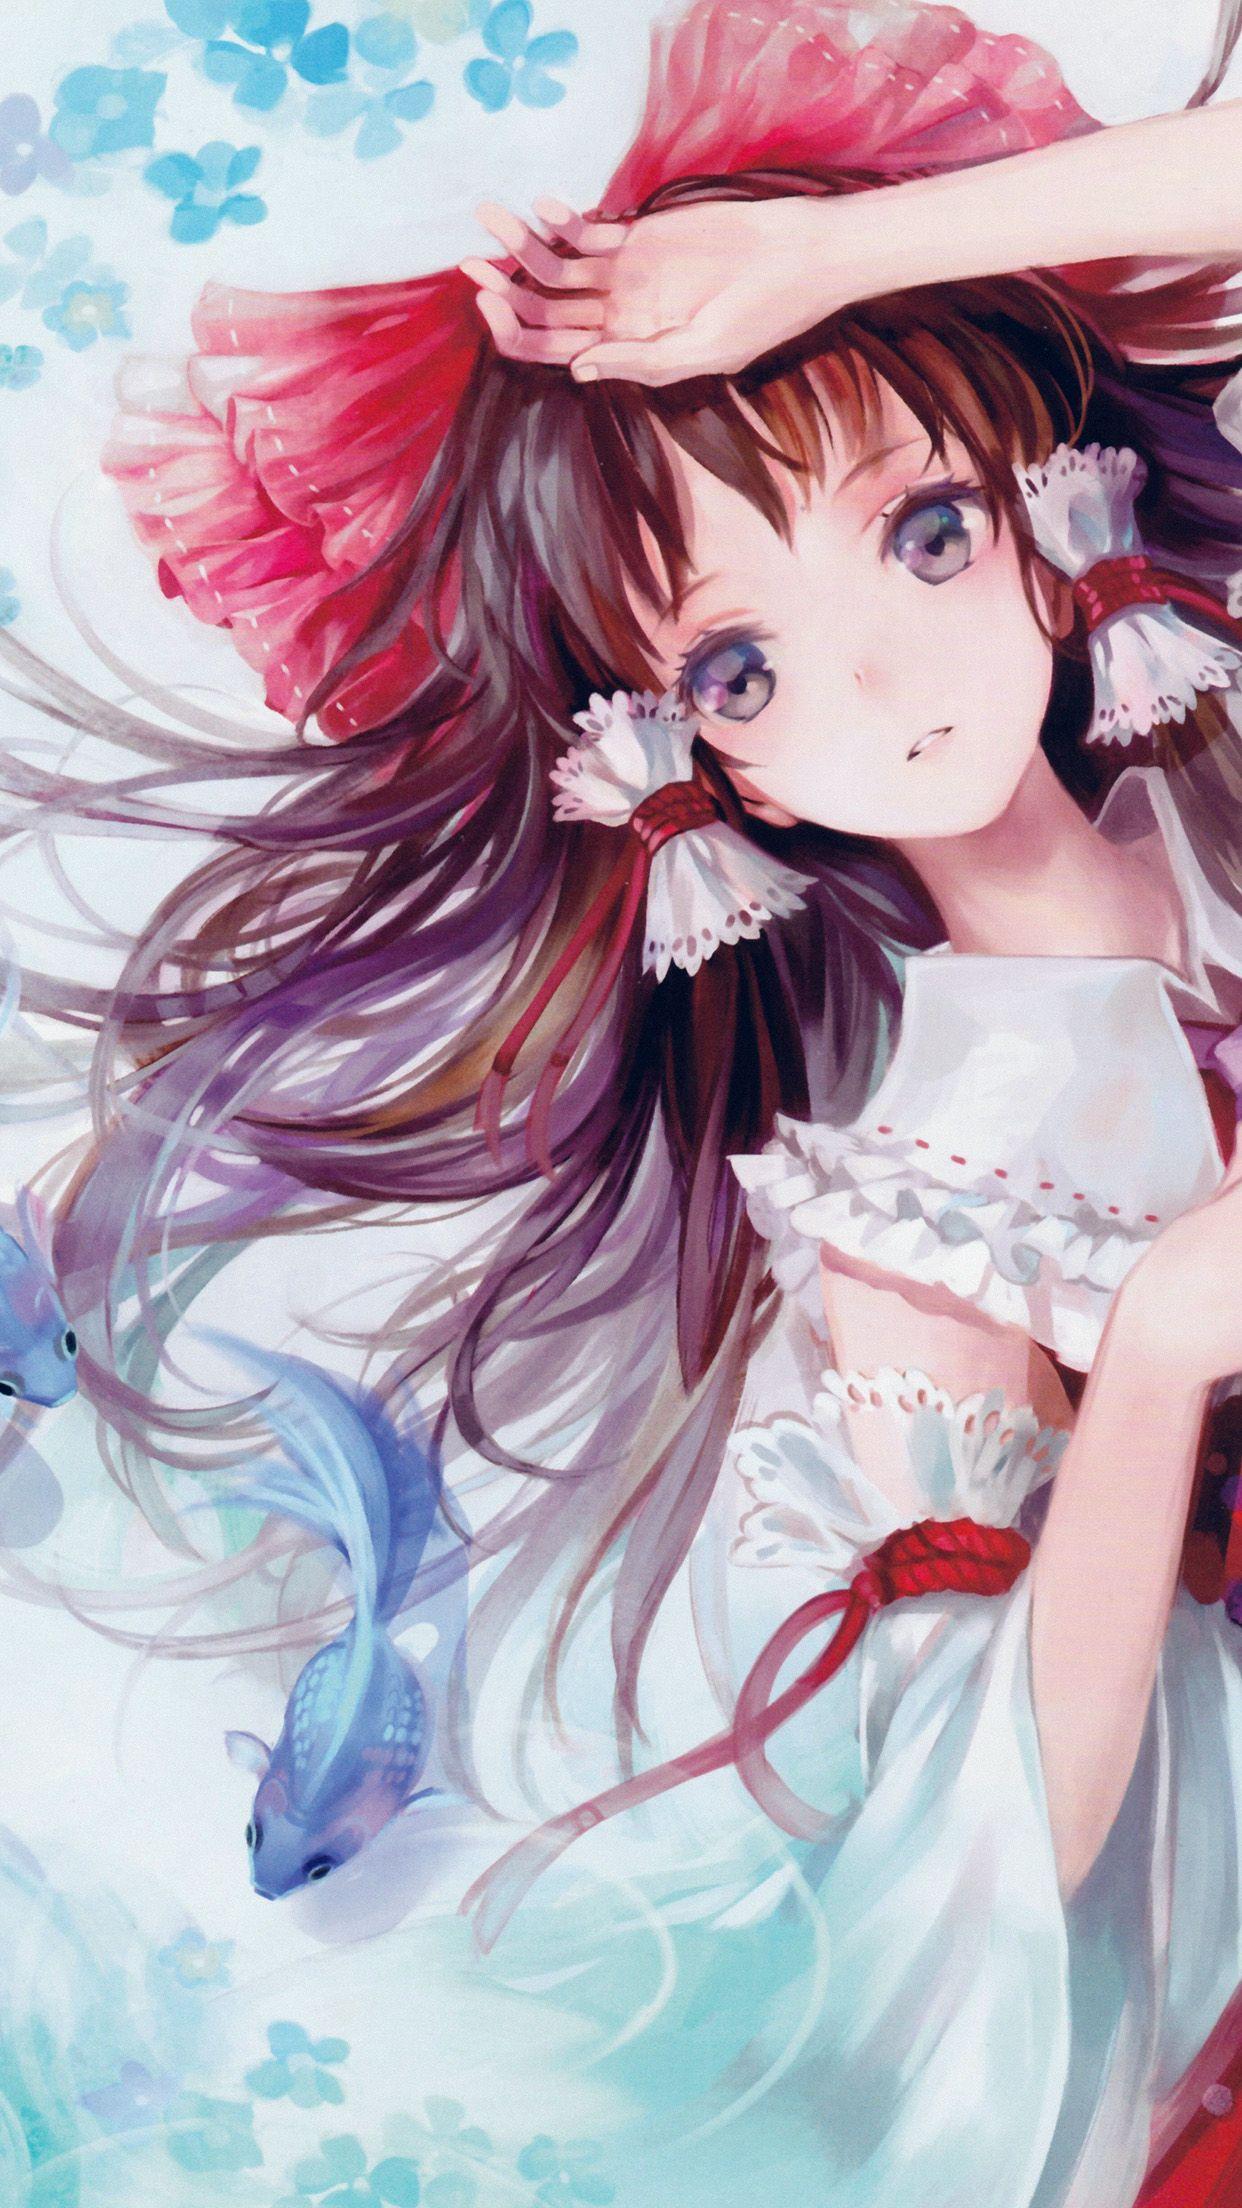 Anime Girl iPhone Wallpaper Free Anime Girl iPhone Background